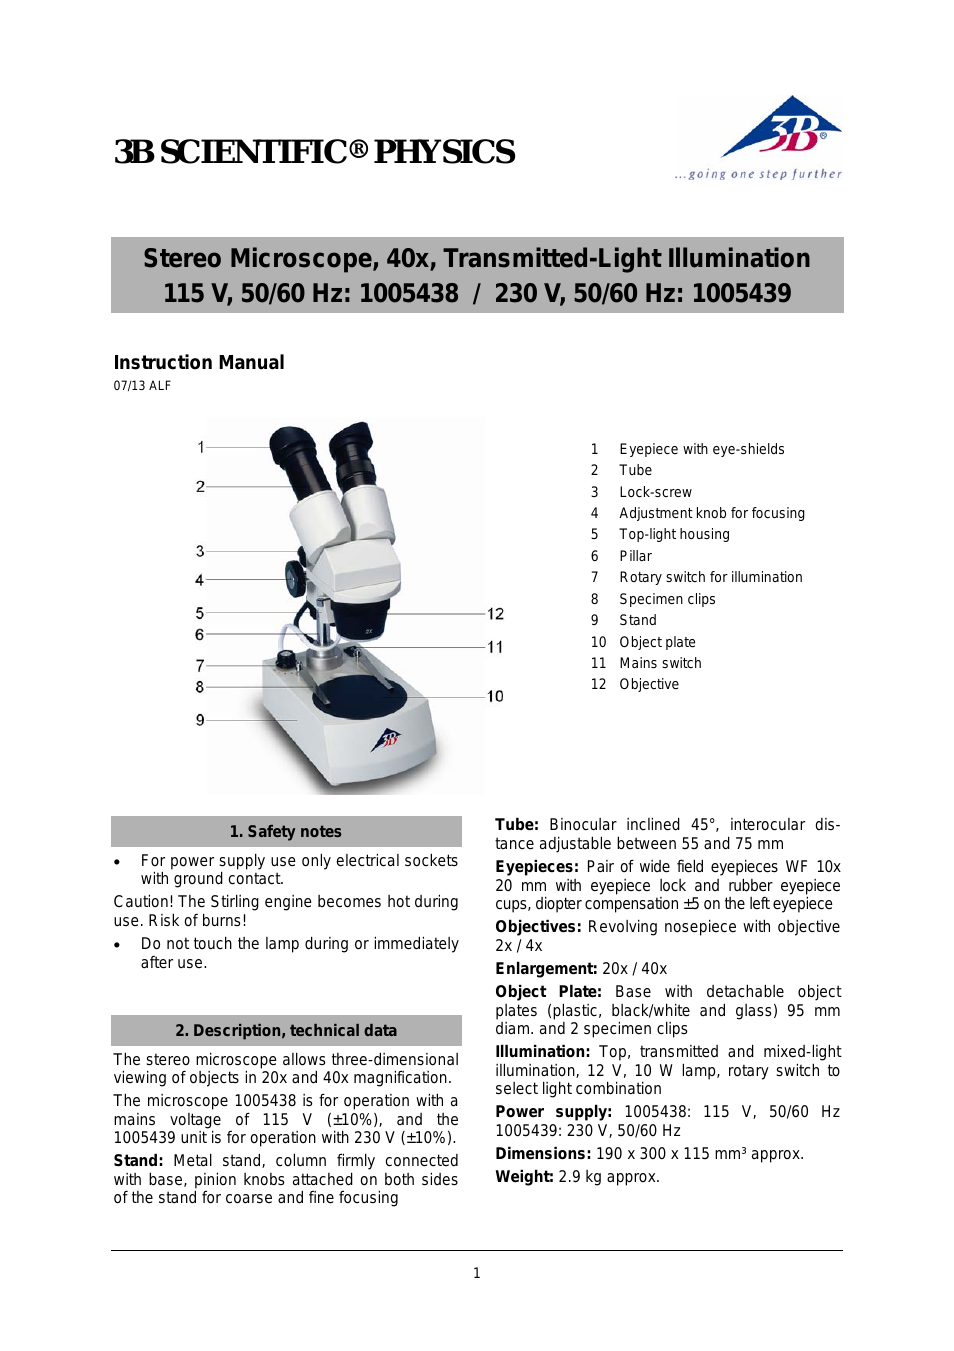 Stereo Microscope, 40x, Transmitted-Light Illumination (115 V, 50__60 Hz)